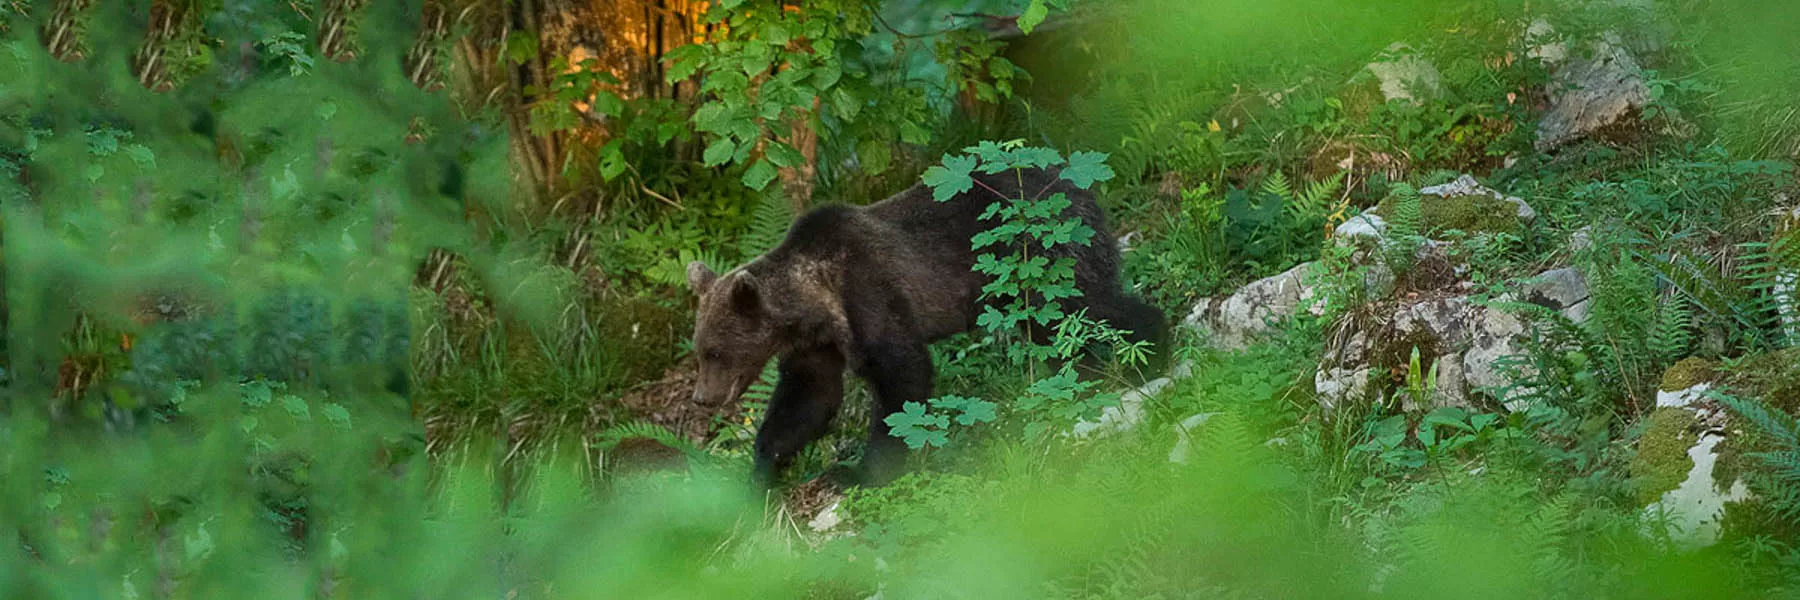 Spotting Brown bears of Slovenia